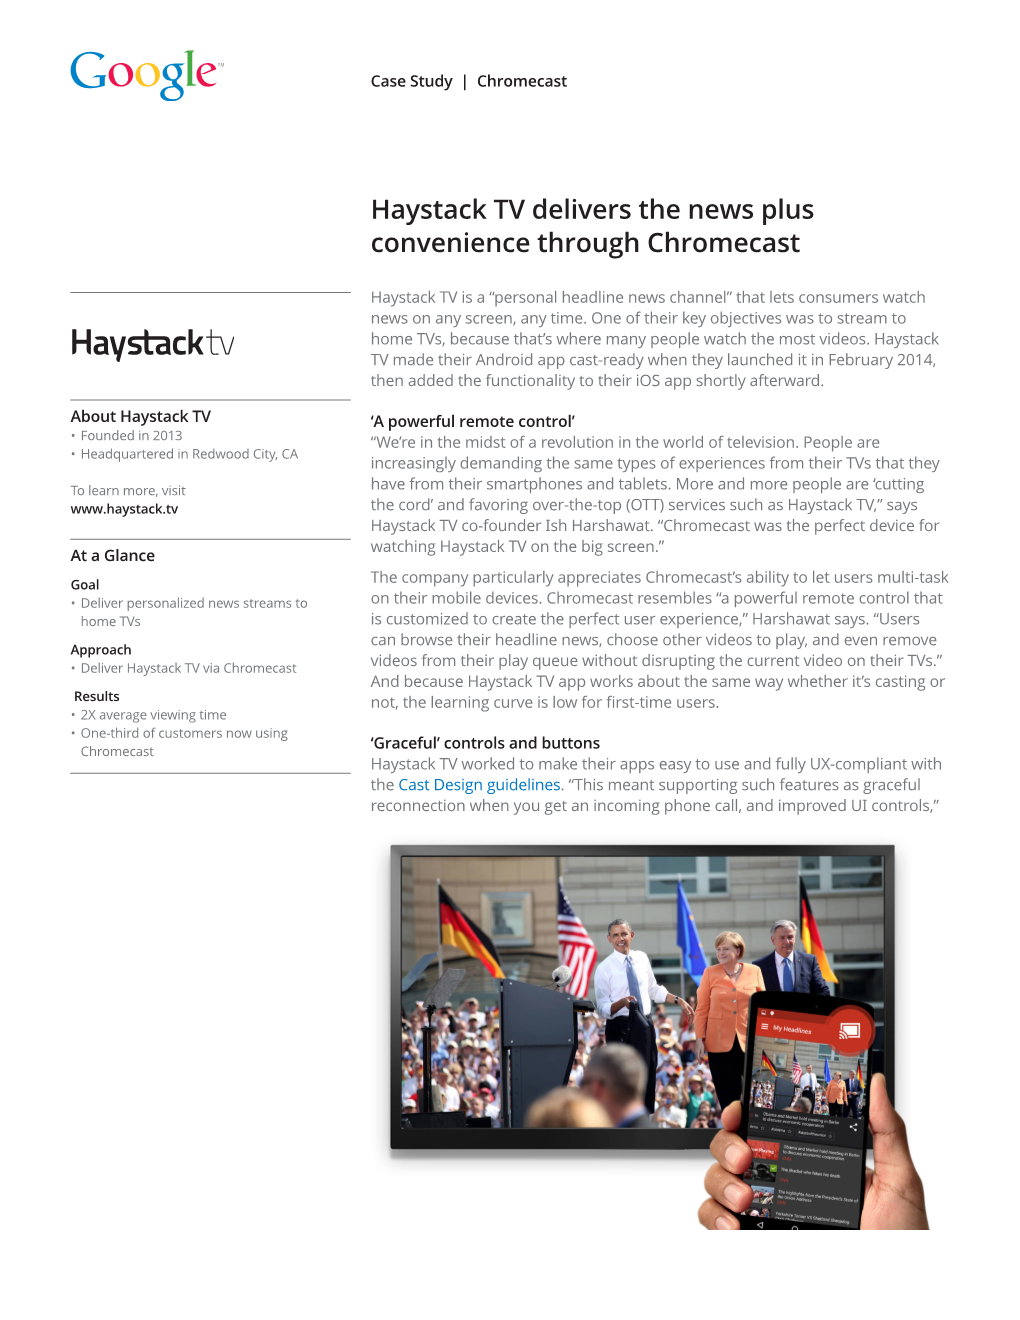 Haystack TV Delivers the News Plus Convenience Through Chromecast